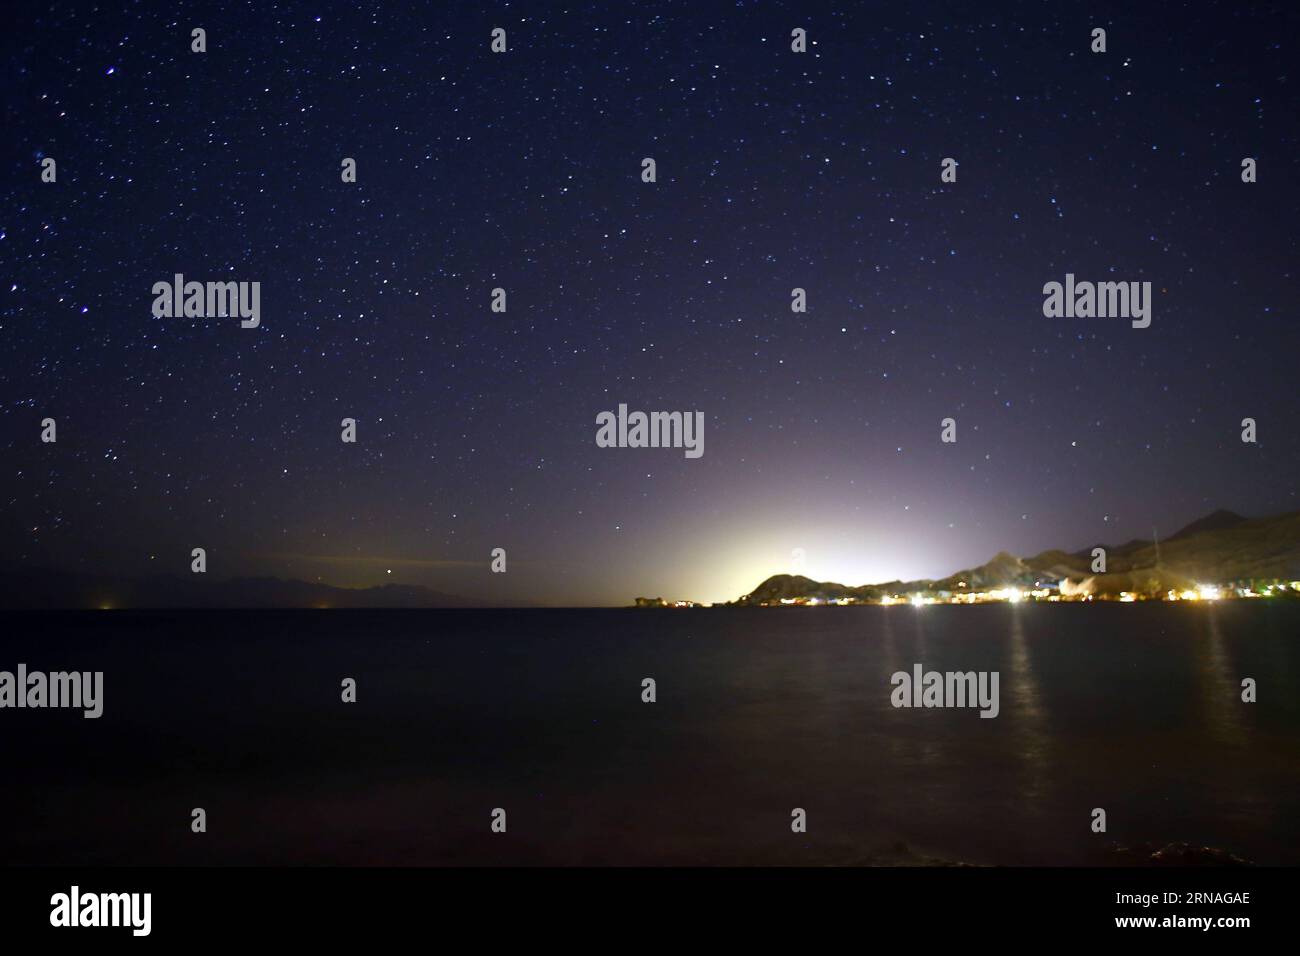 (160125) -- SINA, Jan. 25, 2016 -- Stars are seen in the sky over the desert south of Sina, Egypt on Jan. 11, 2016. ) (zjy) EGYPT-SINA-STARS AhmedxGomaa PUBLICATIONxNOTxINxCHN   160125 Sina Jan 25 2016 Stars are Lakes in The Sky Over The Desert South of Sina Egypt ON Jan 11 2016 zjy Egypt Sina Stars AhmedxGomaa PUBLICATIONxNOTxINxCHN Stock Photo